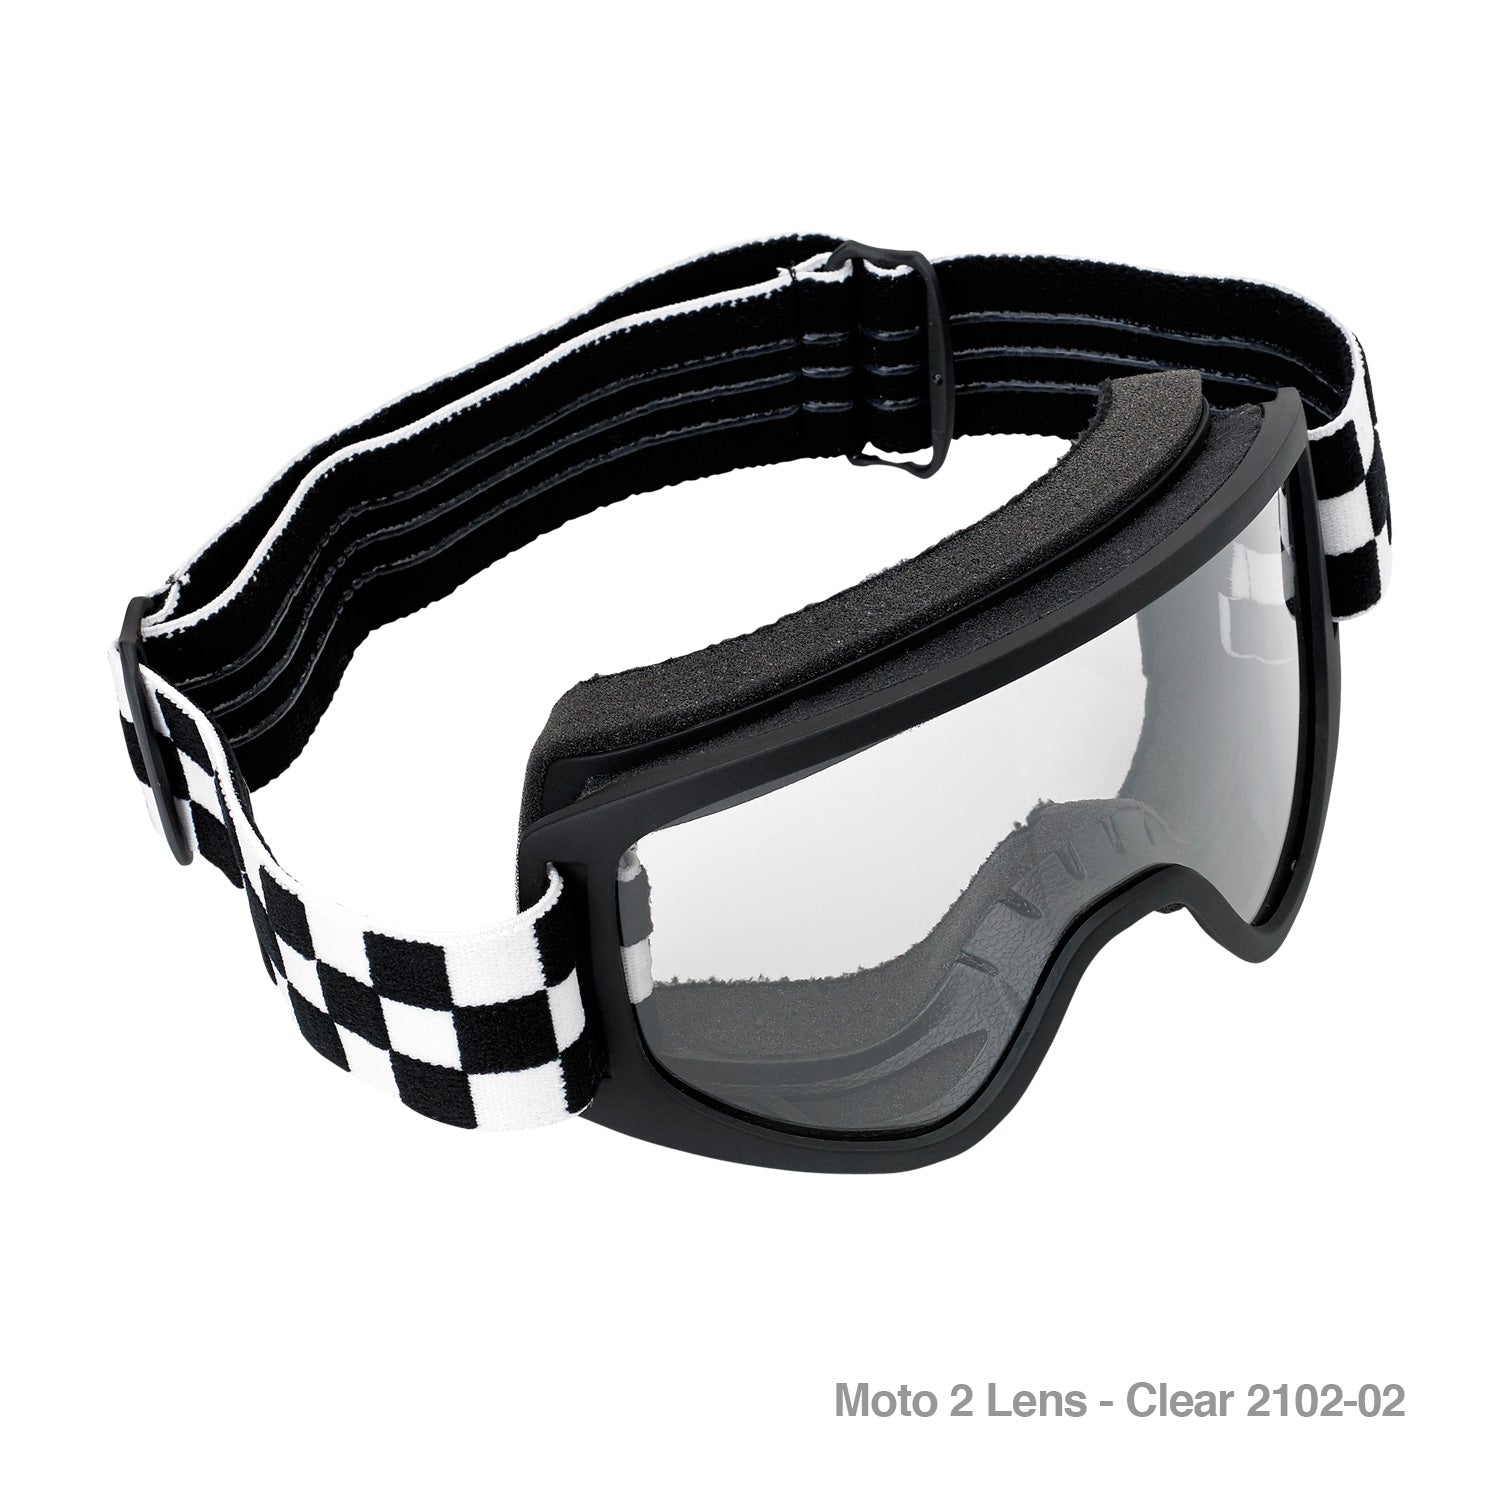 Moto 2.0 Goggle Lens - Clear